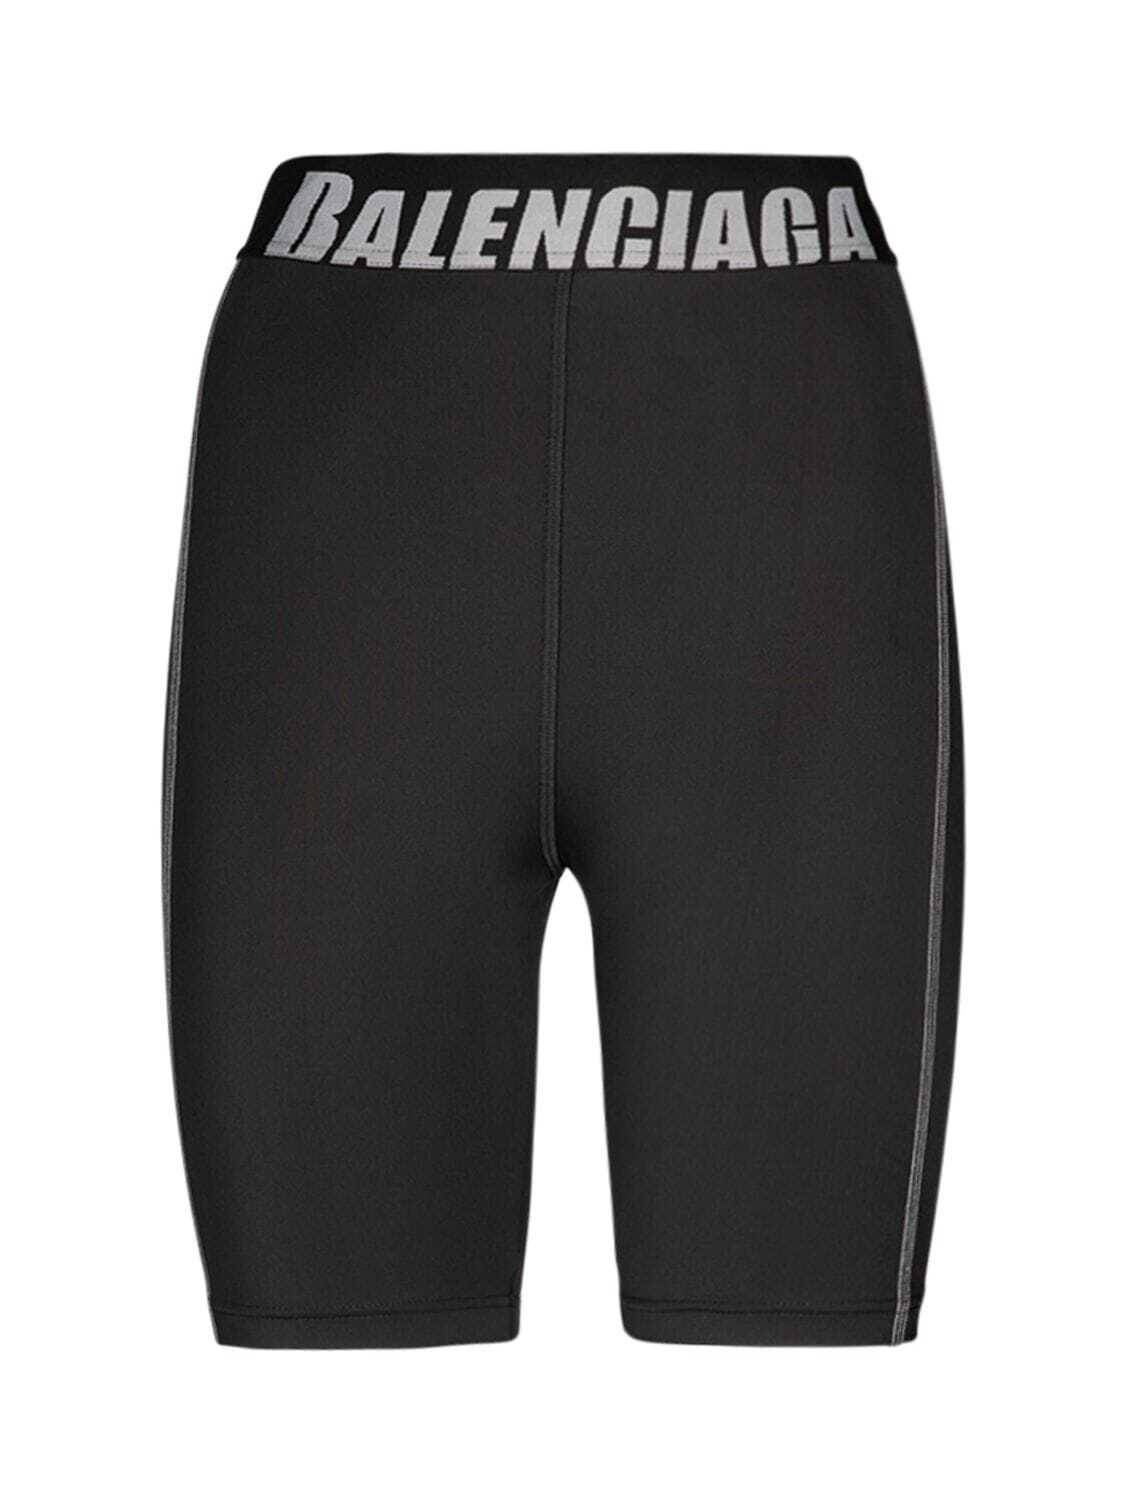 BALENCIAGA Spandex Cycling Shorts in black / grey